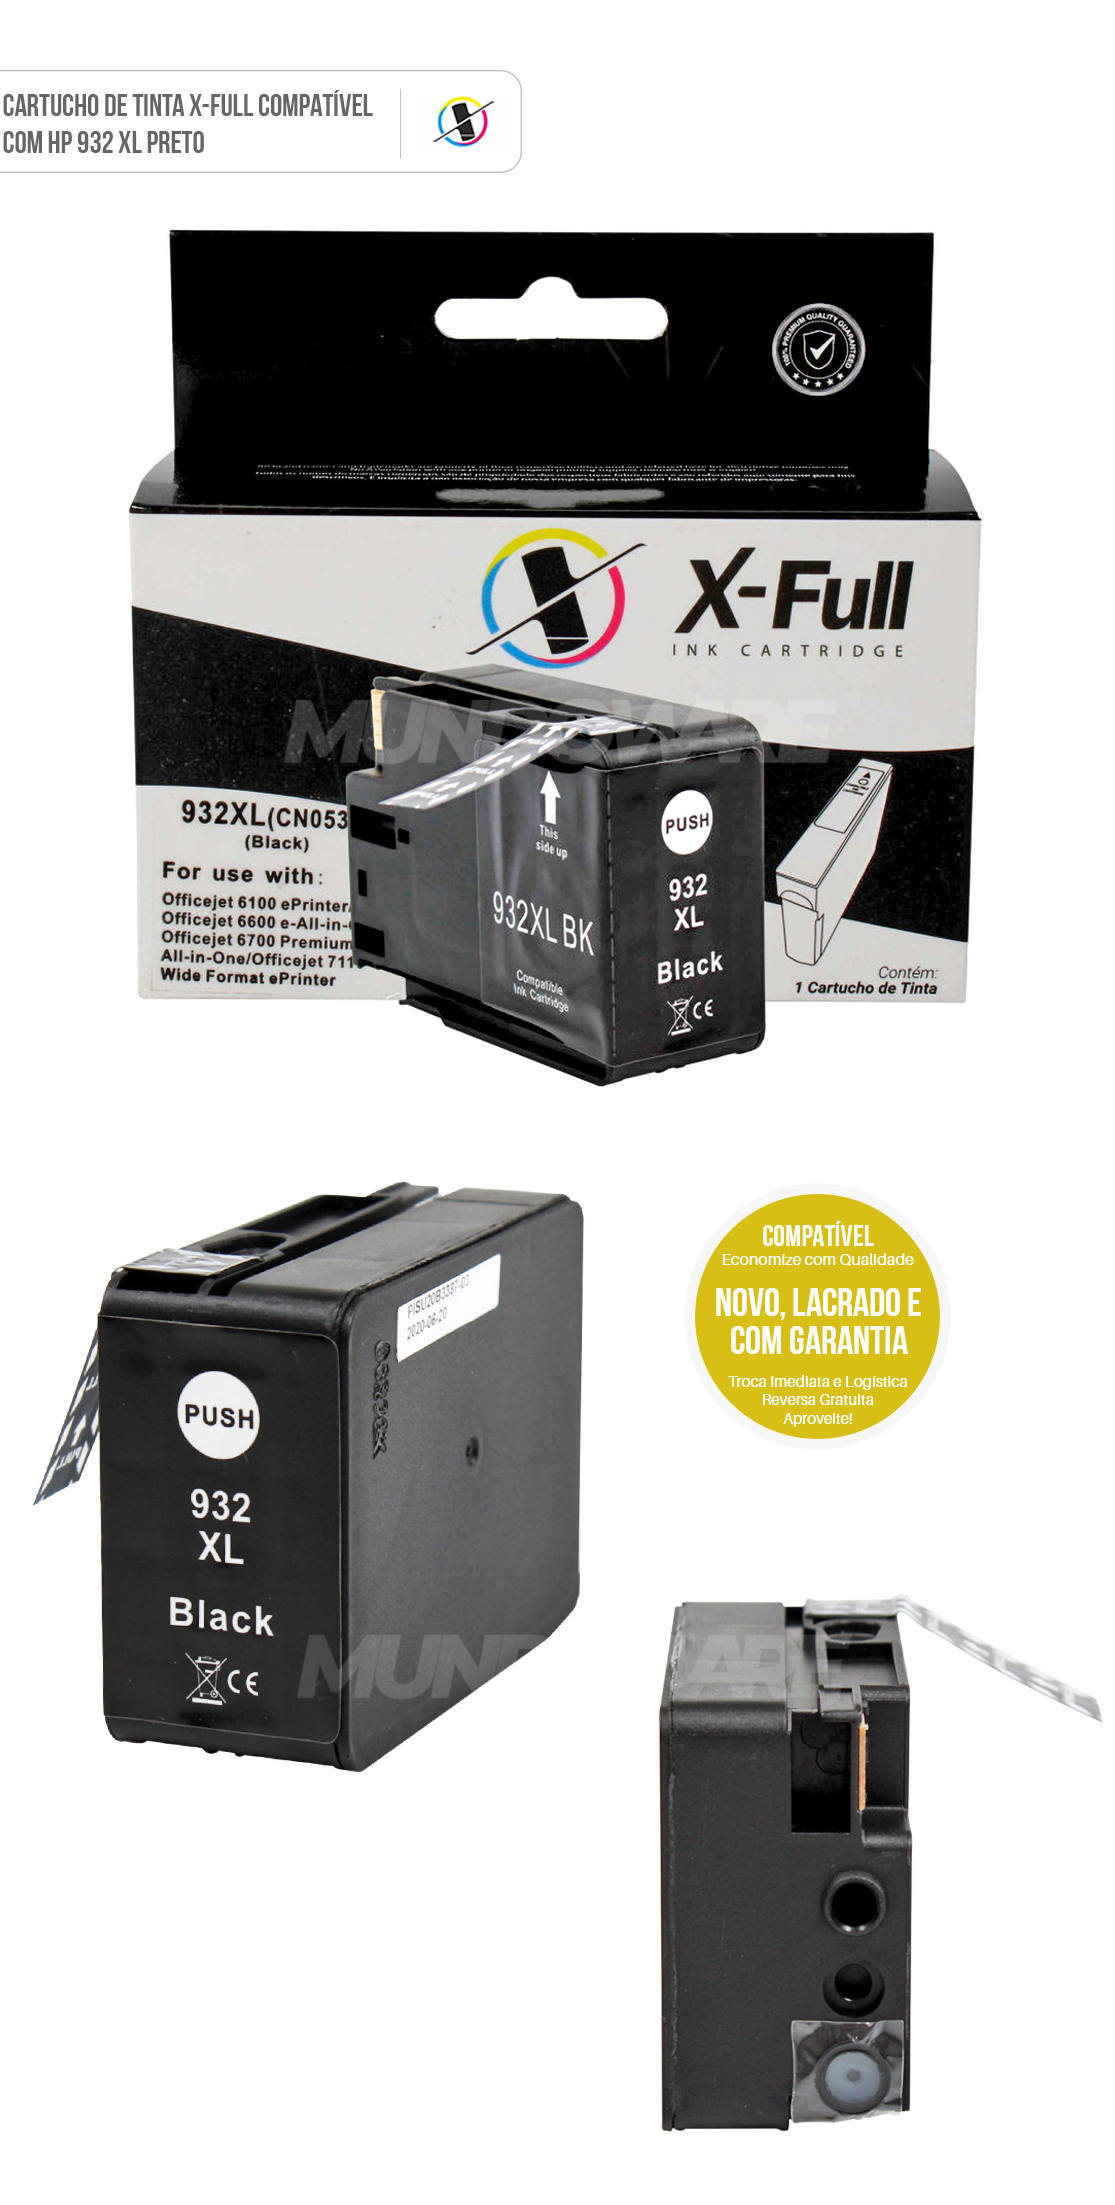 Cartucho de Tinta X-Full Compatível com HP 932xl 932 para Impressora 6100 6600 6700 7100A 7110 7610 7612 Preto 50ml